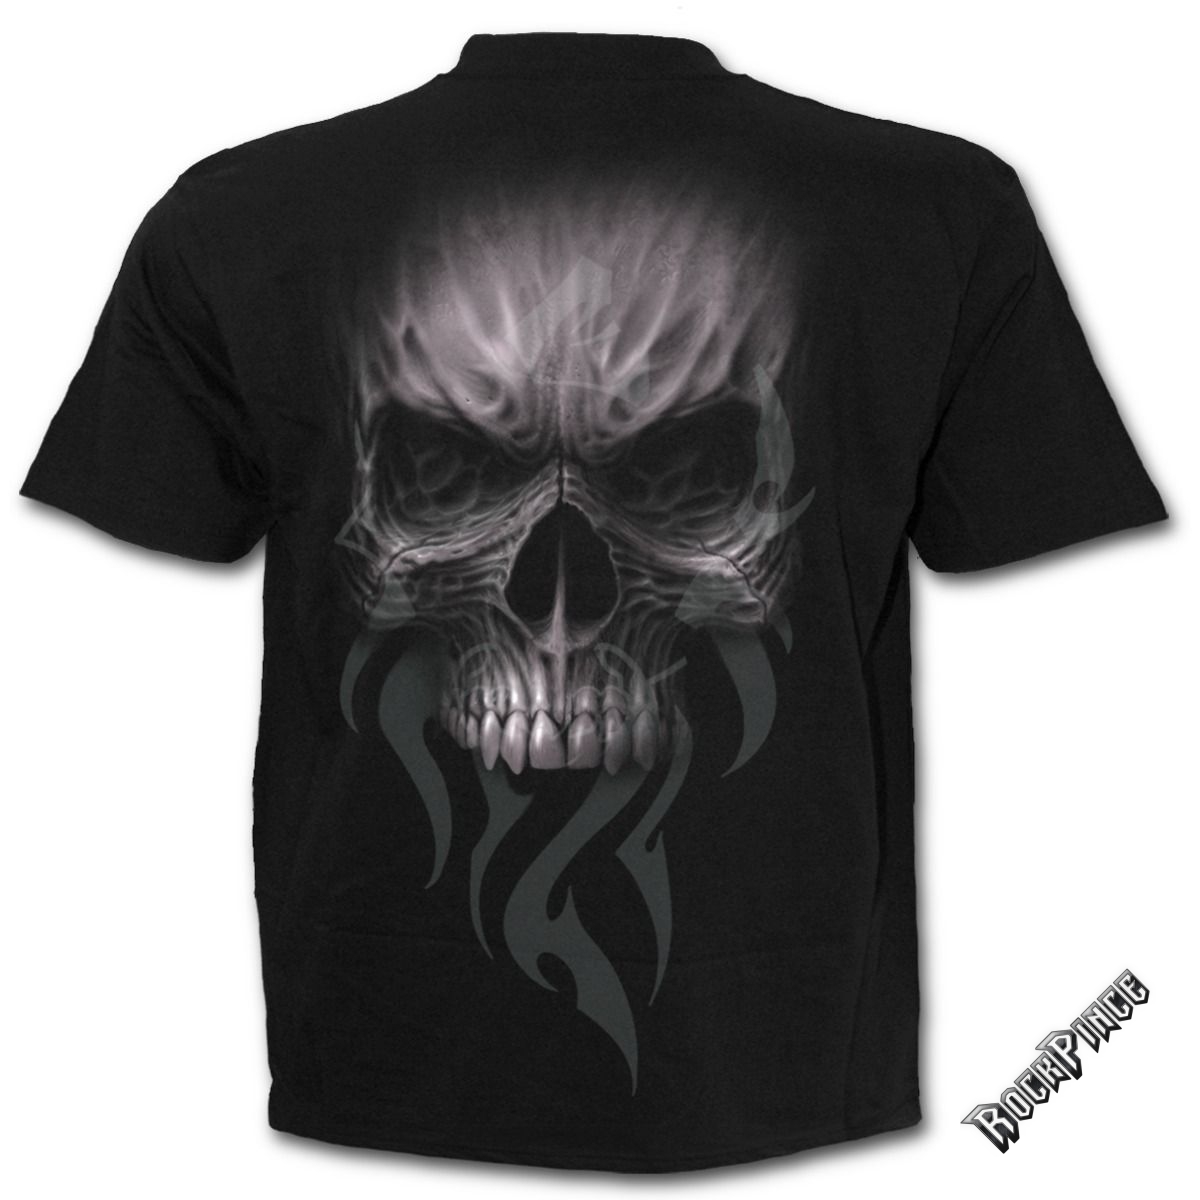 DEATH RAGE - T-Shirt Black - T114M101